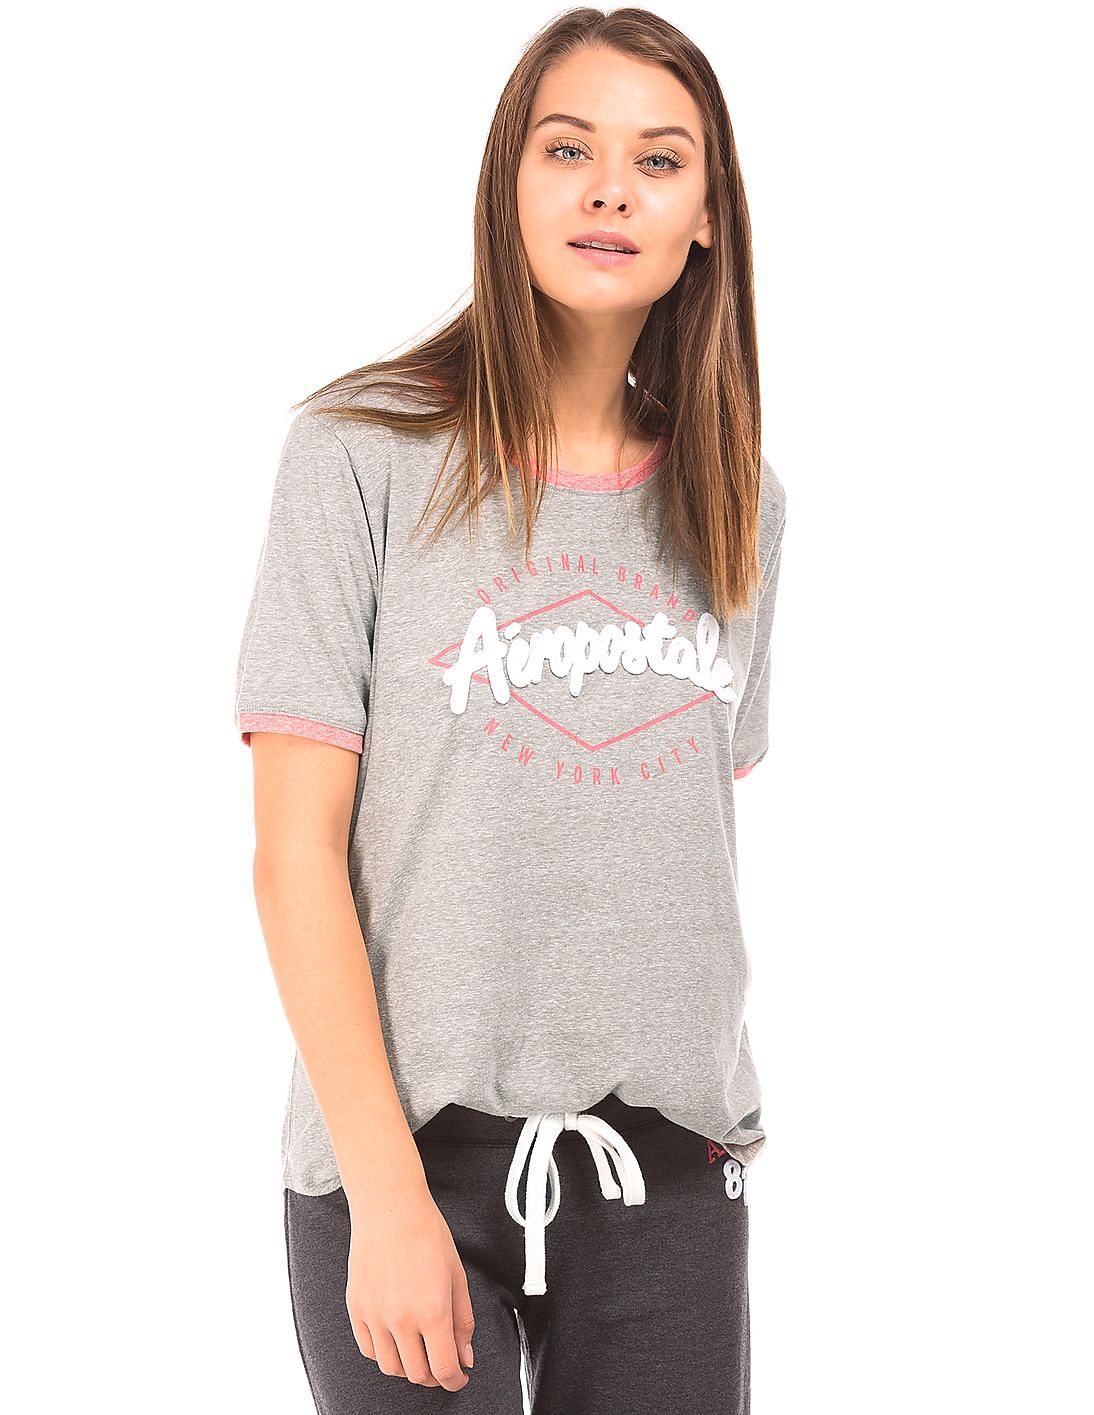 Buy Aeropostale Contrast Neck Heathered T-Shirt - NNNOW.com